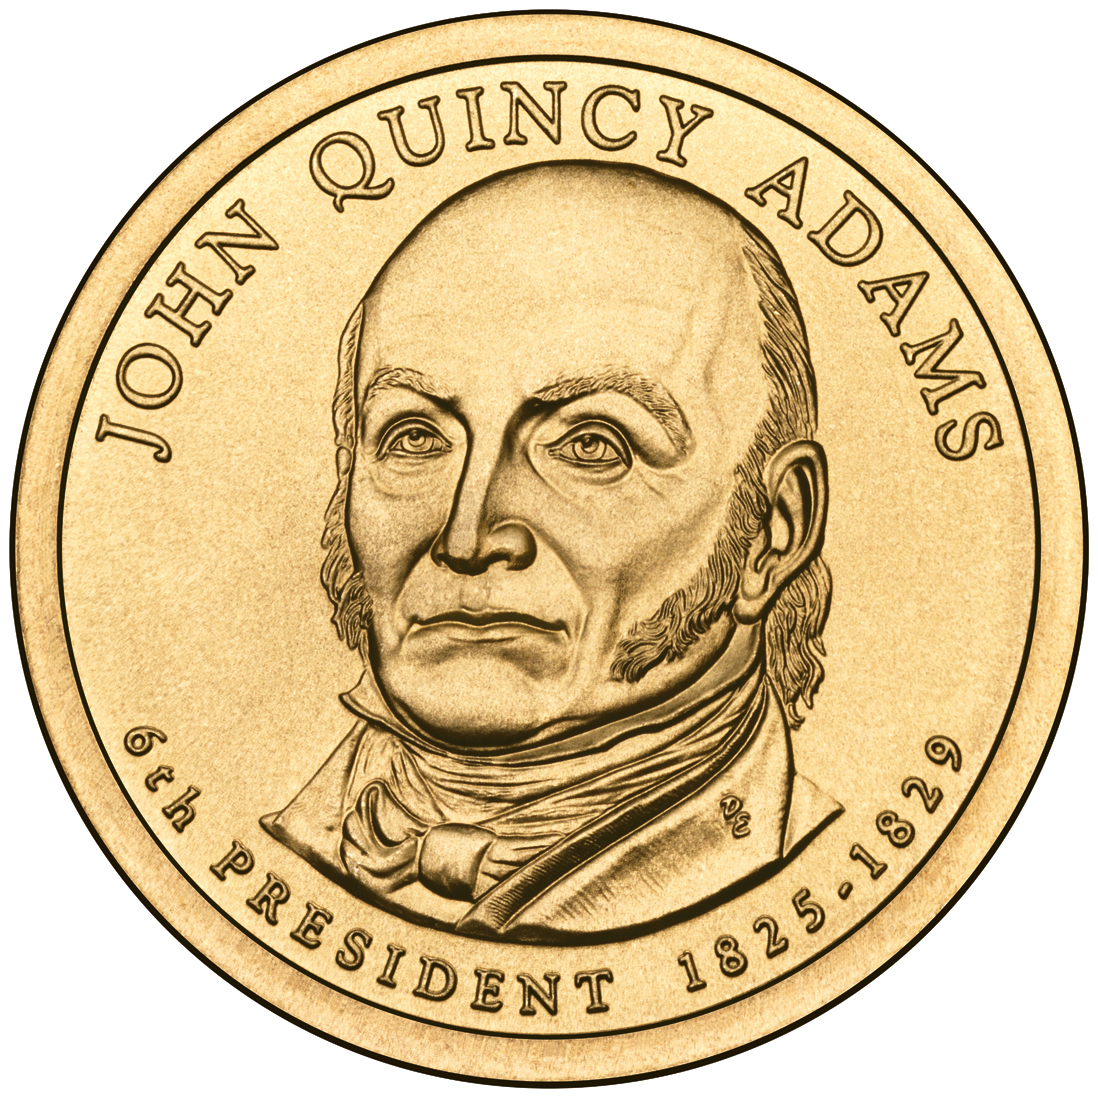 File:John Quincy Adams Presidential $1 Coin obverse.jpg - Wikipedia, the free encyclopedia